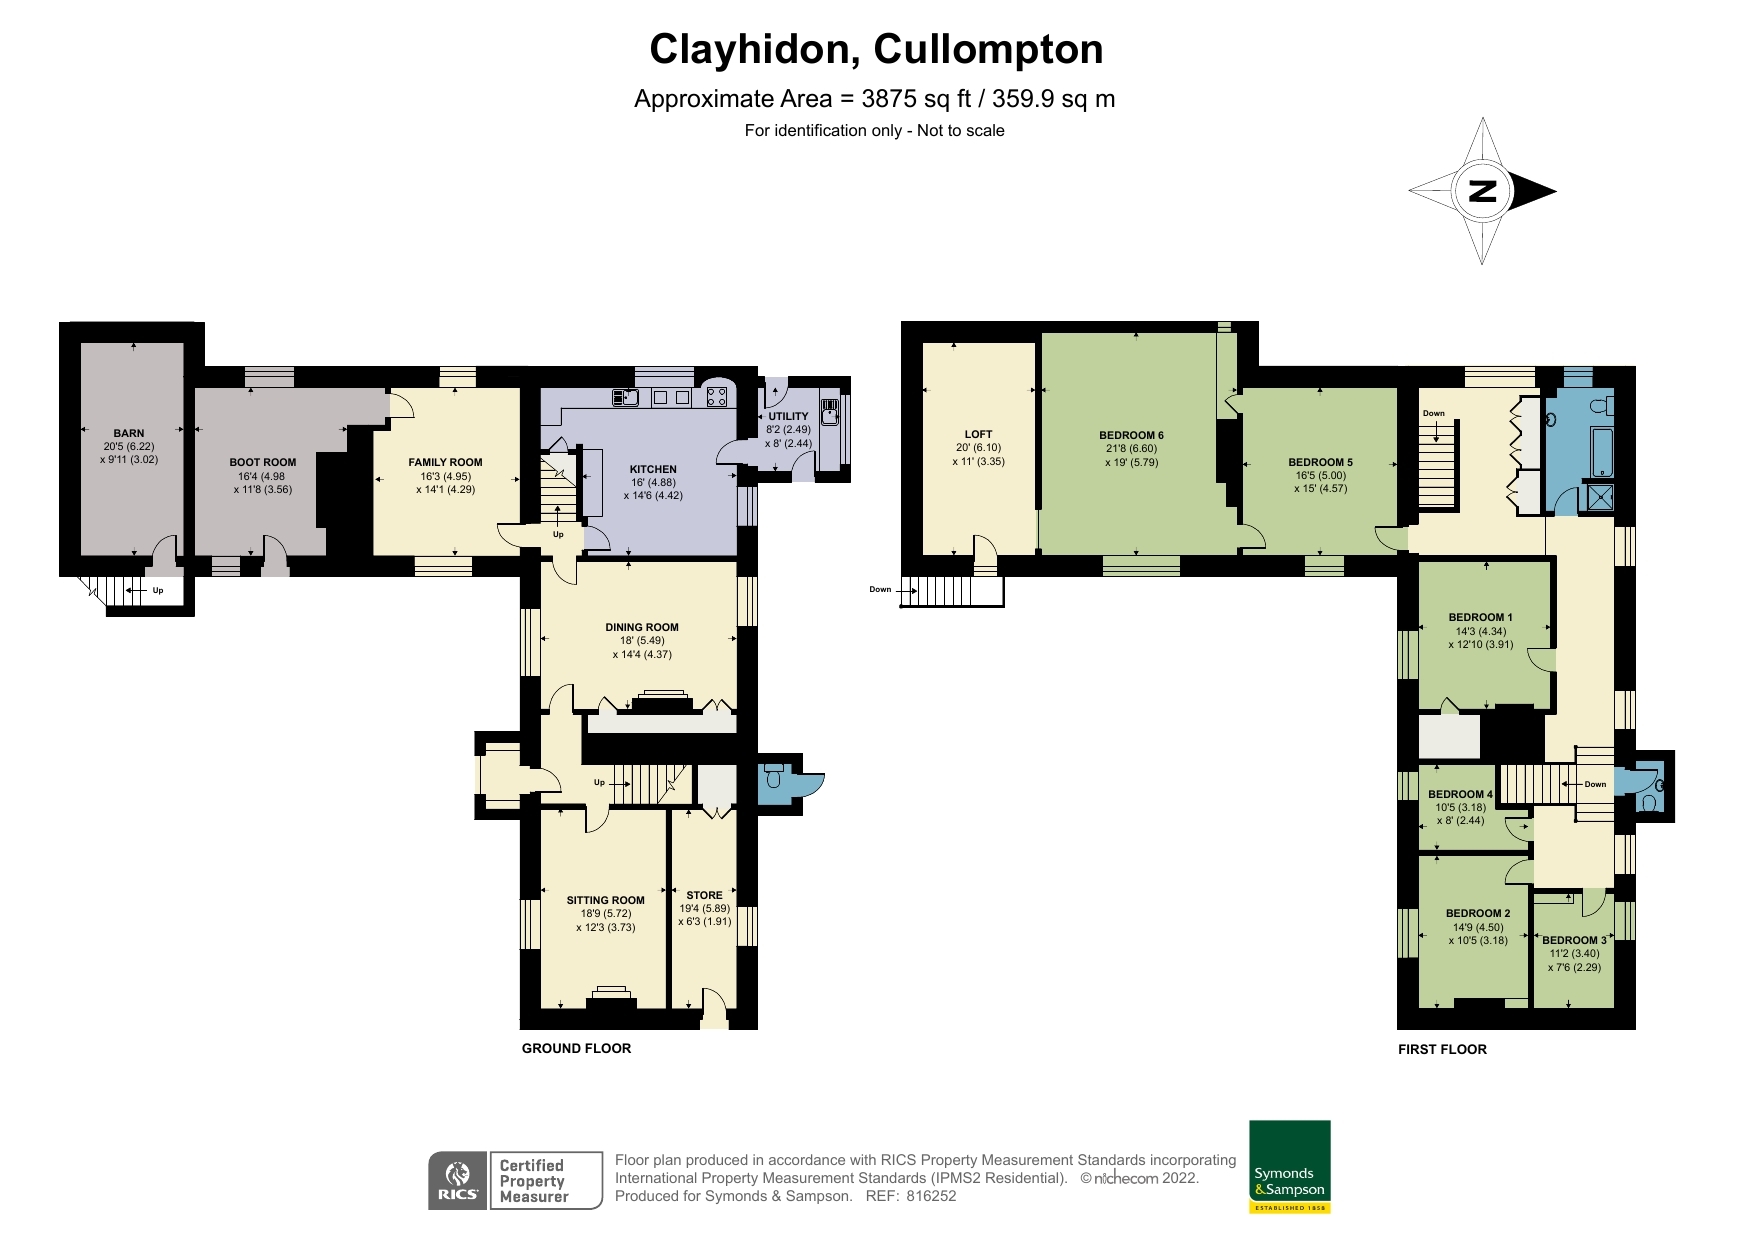 Floorplan - Battle Street, Clayhidon, Cullompton, Devon, EX15 3TQ